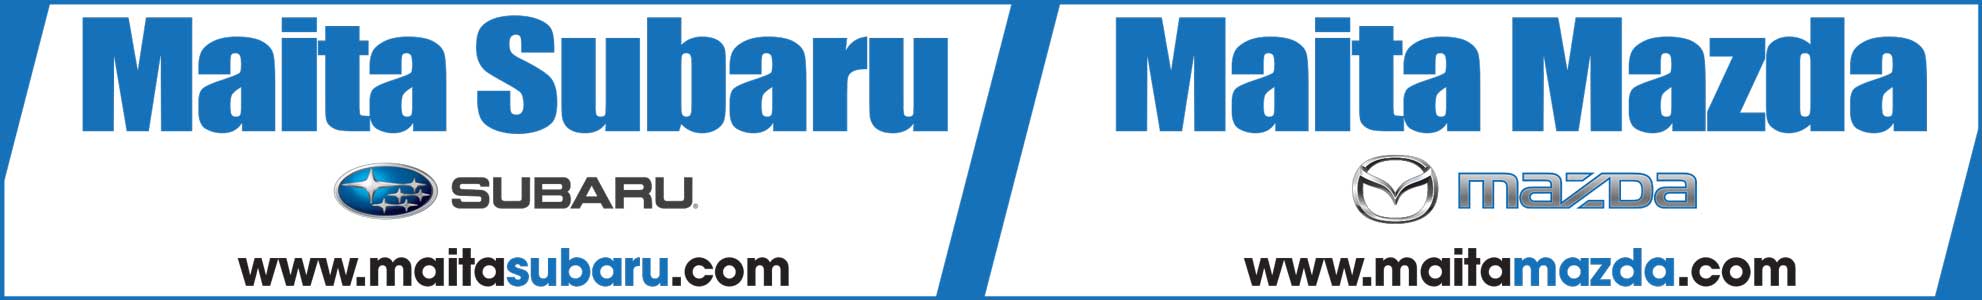 Maita Subaru logo